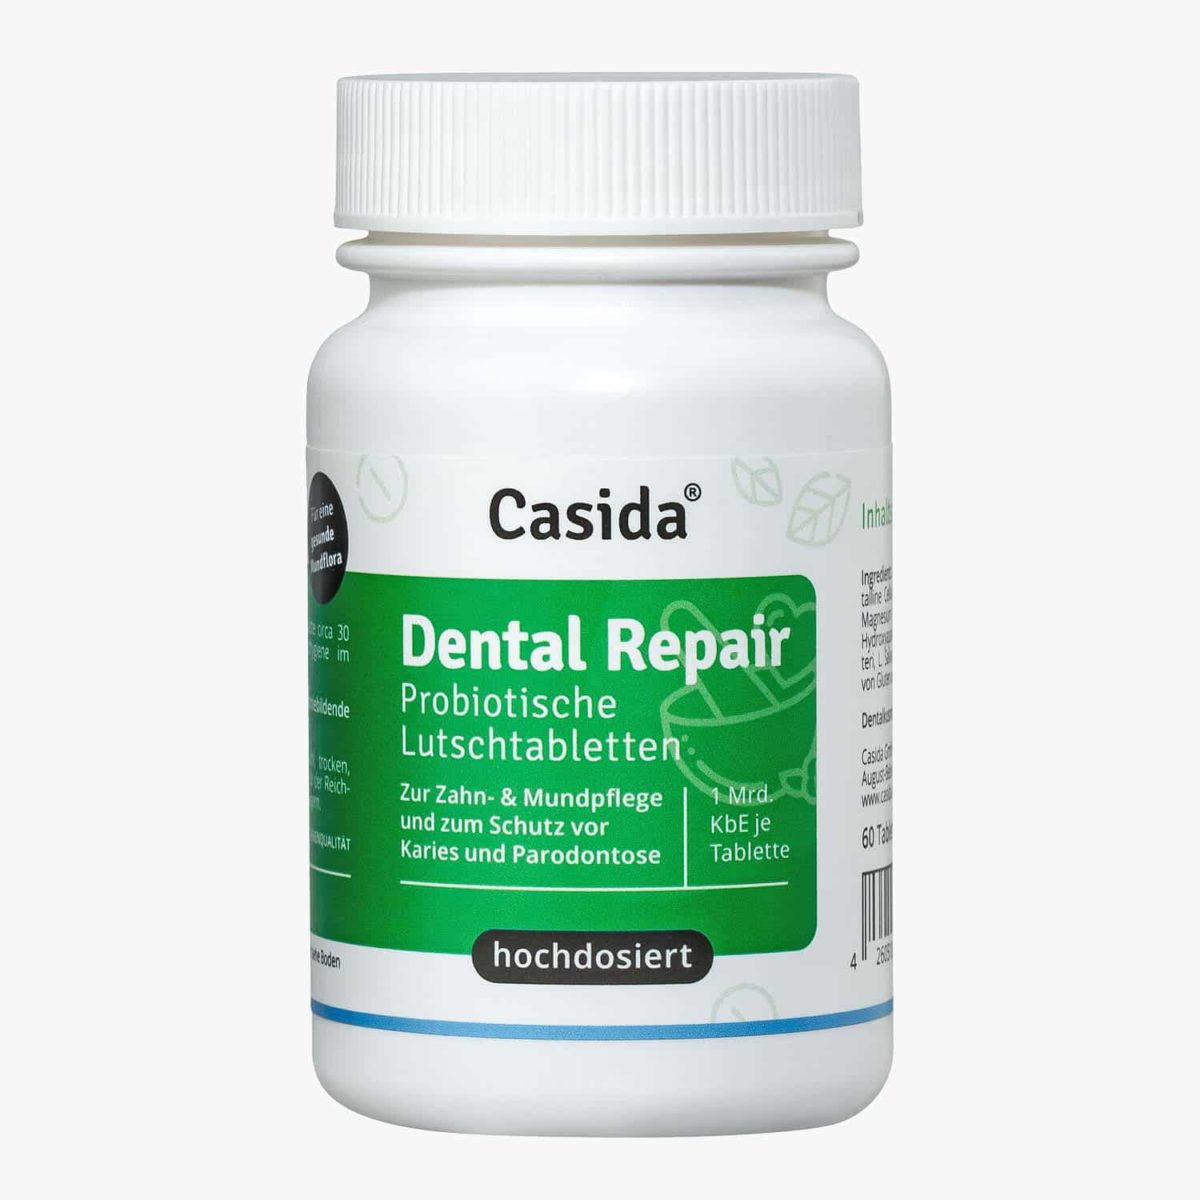 Casida Dental Repair Lutschtabletten 60 Stk. PZN DE 14401553 PZN AT 4900404 UVP 19,95 € EAN 4260518460307 Apotheke Zahn Mundflora